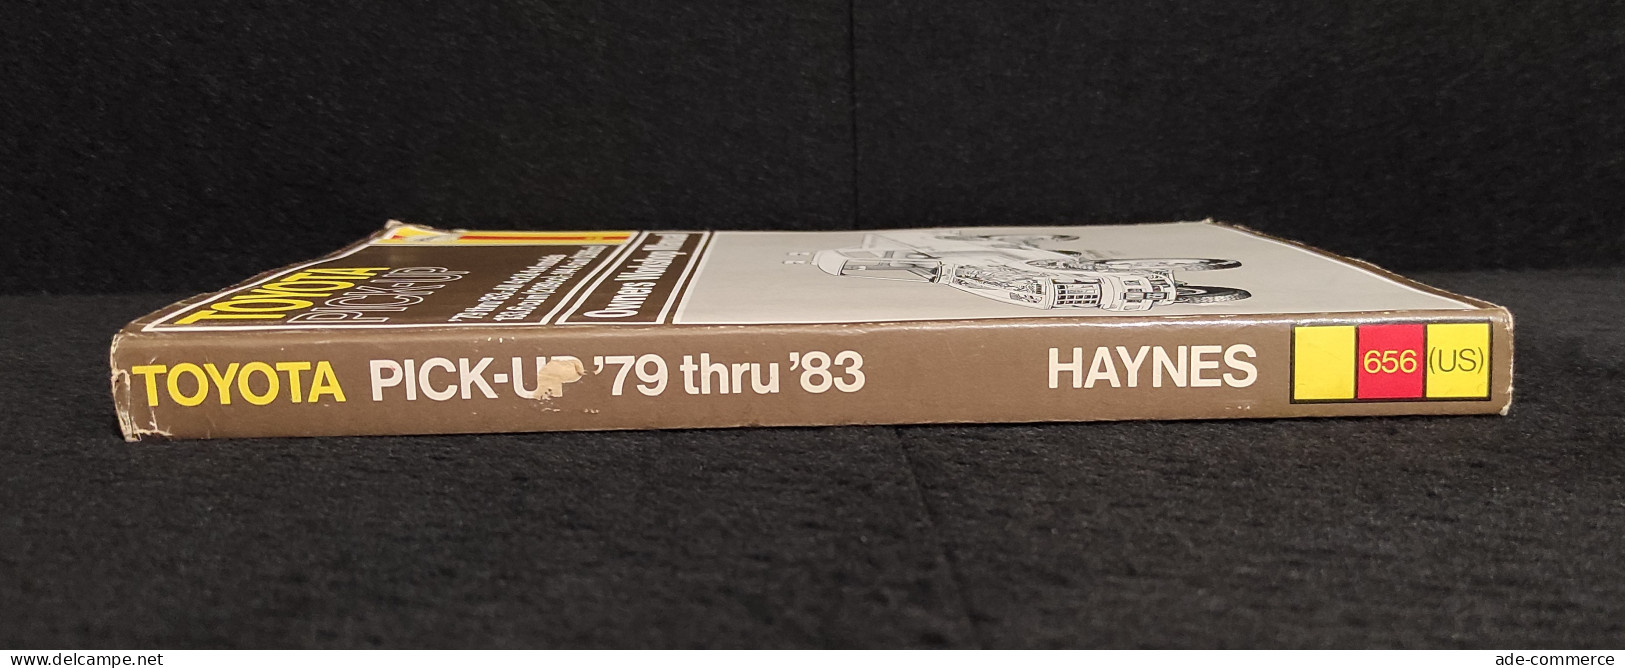 Toyota Pick-up Owners Workshop Manual - Haynes - 1983